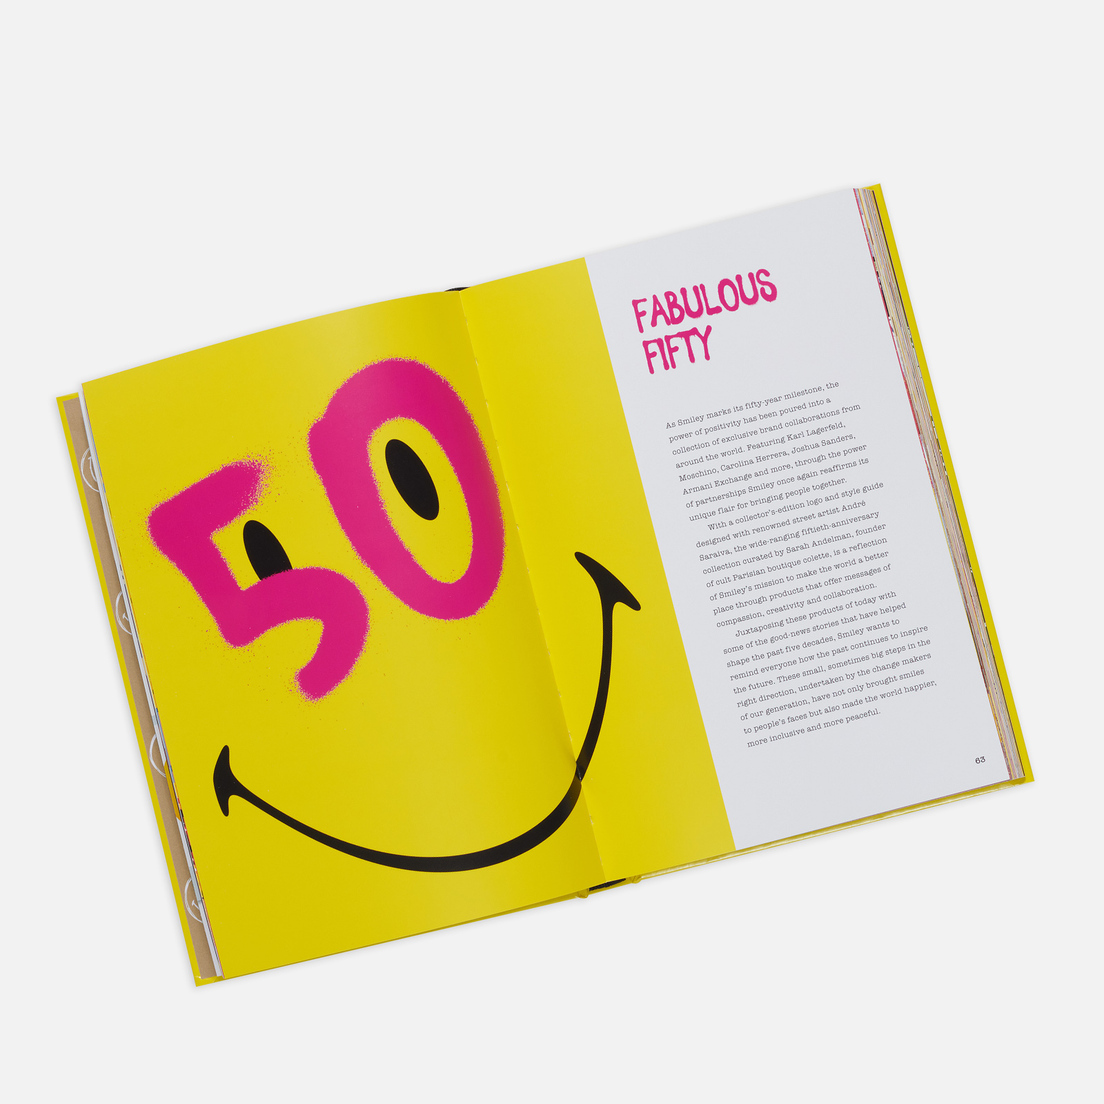 Assouline Книга Smiley: 50 Years Of Good News